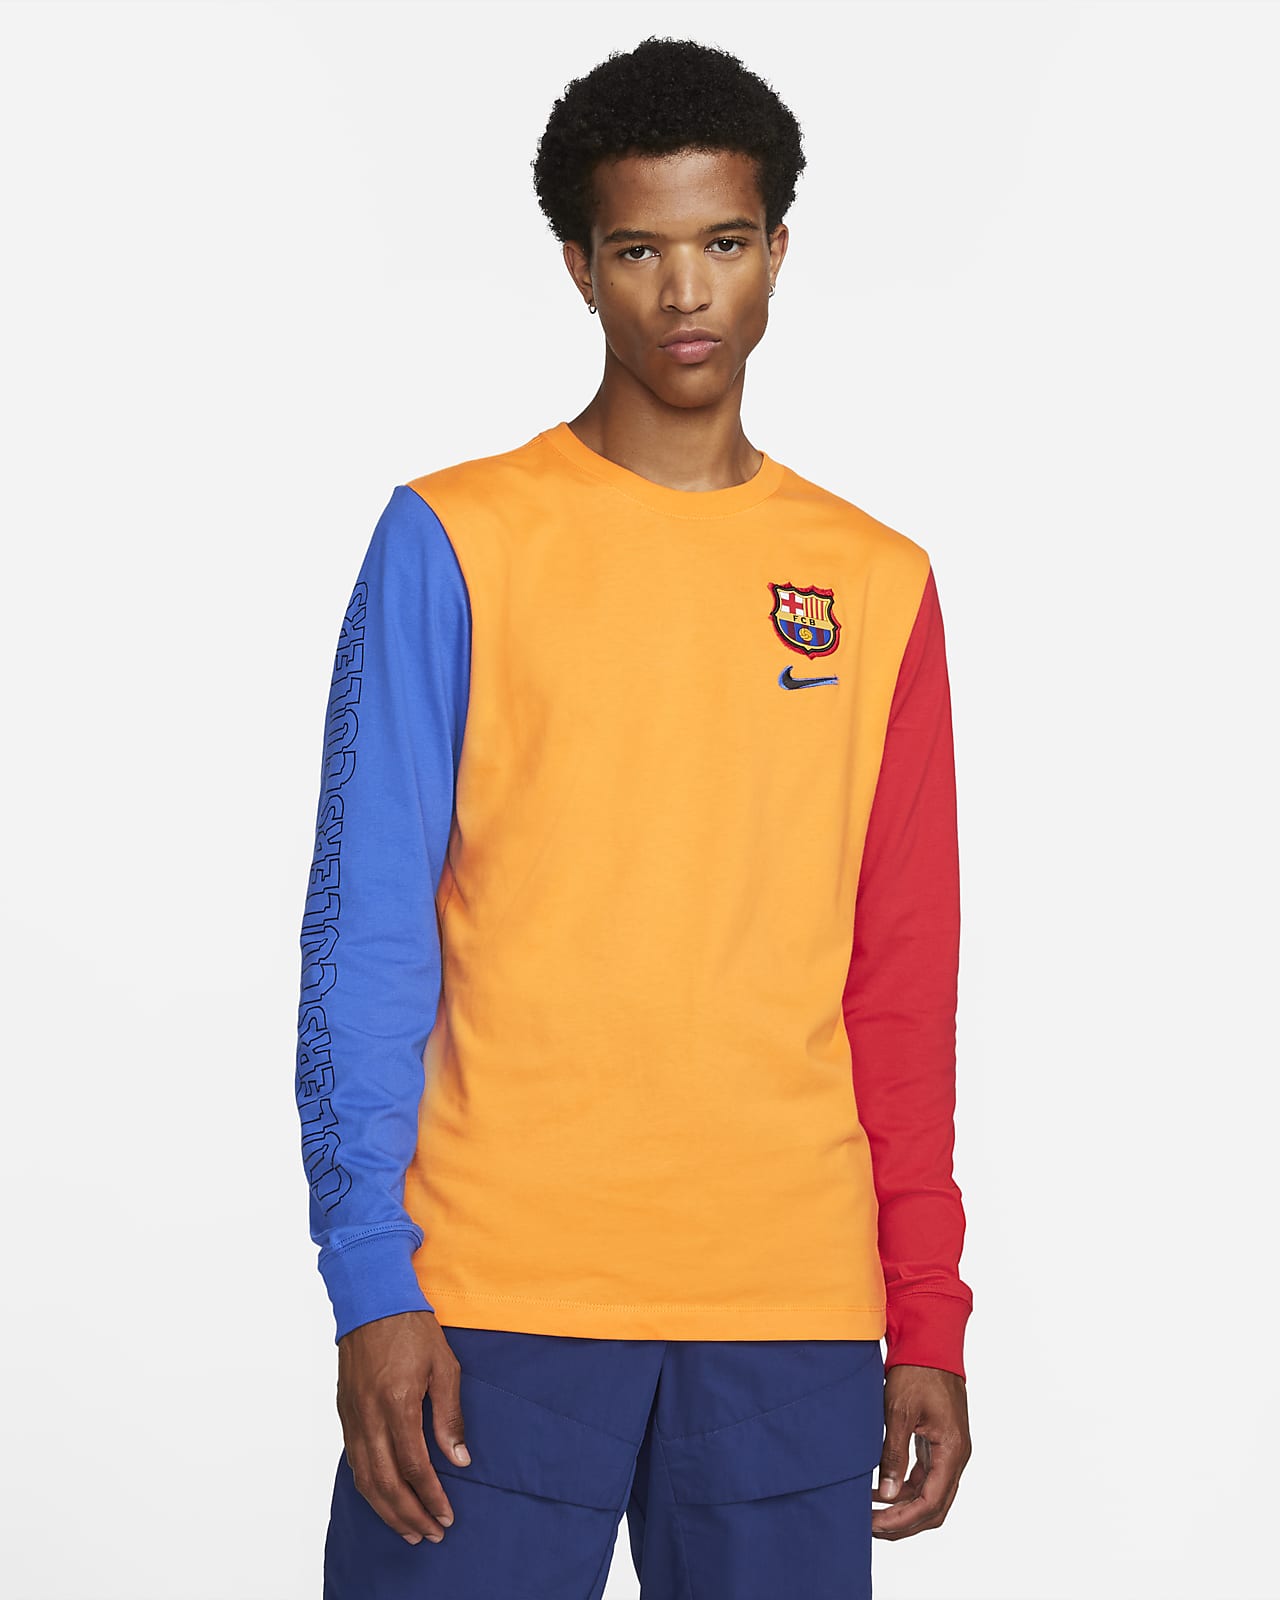 Discreet Judgment goal FC Barcelona Men's Long-Sleeve Soccer T-Shirt. Nike.com